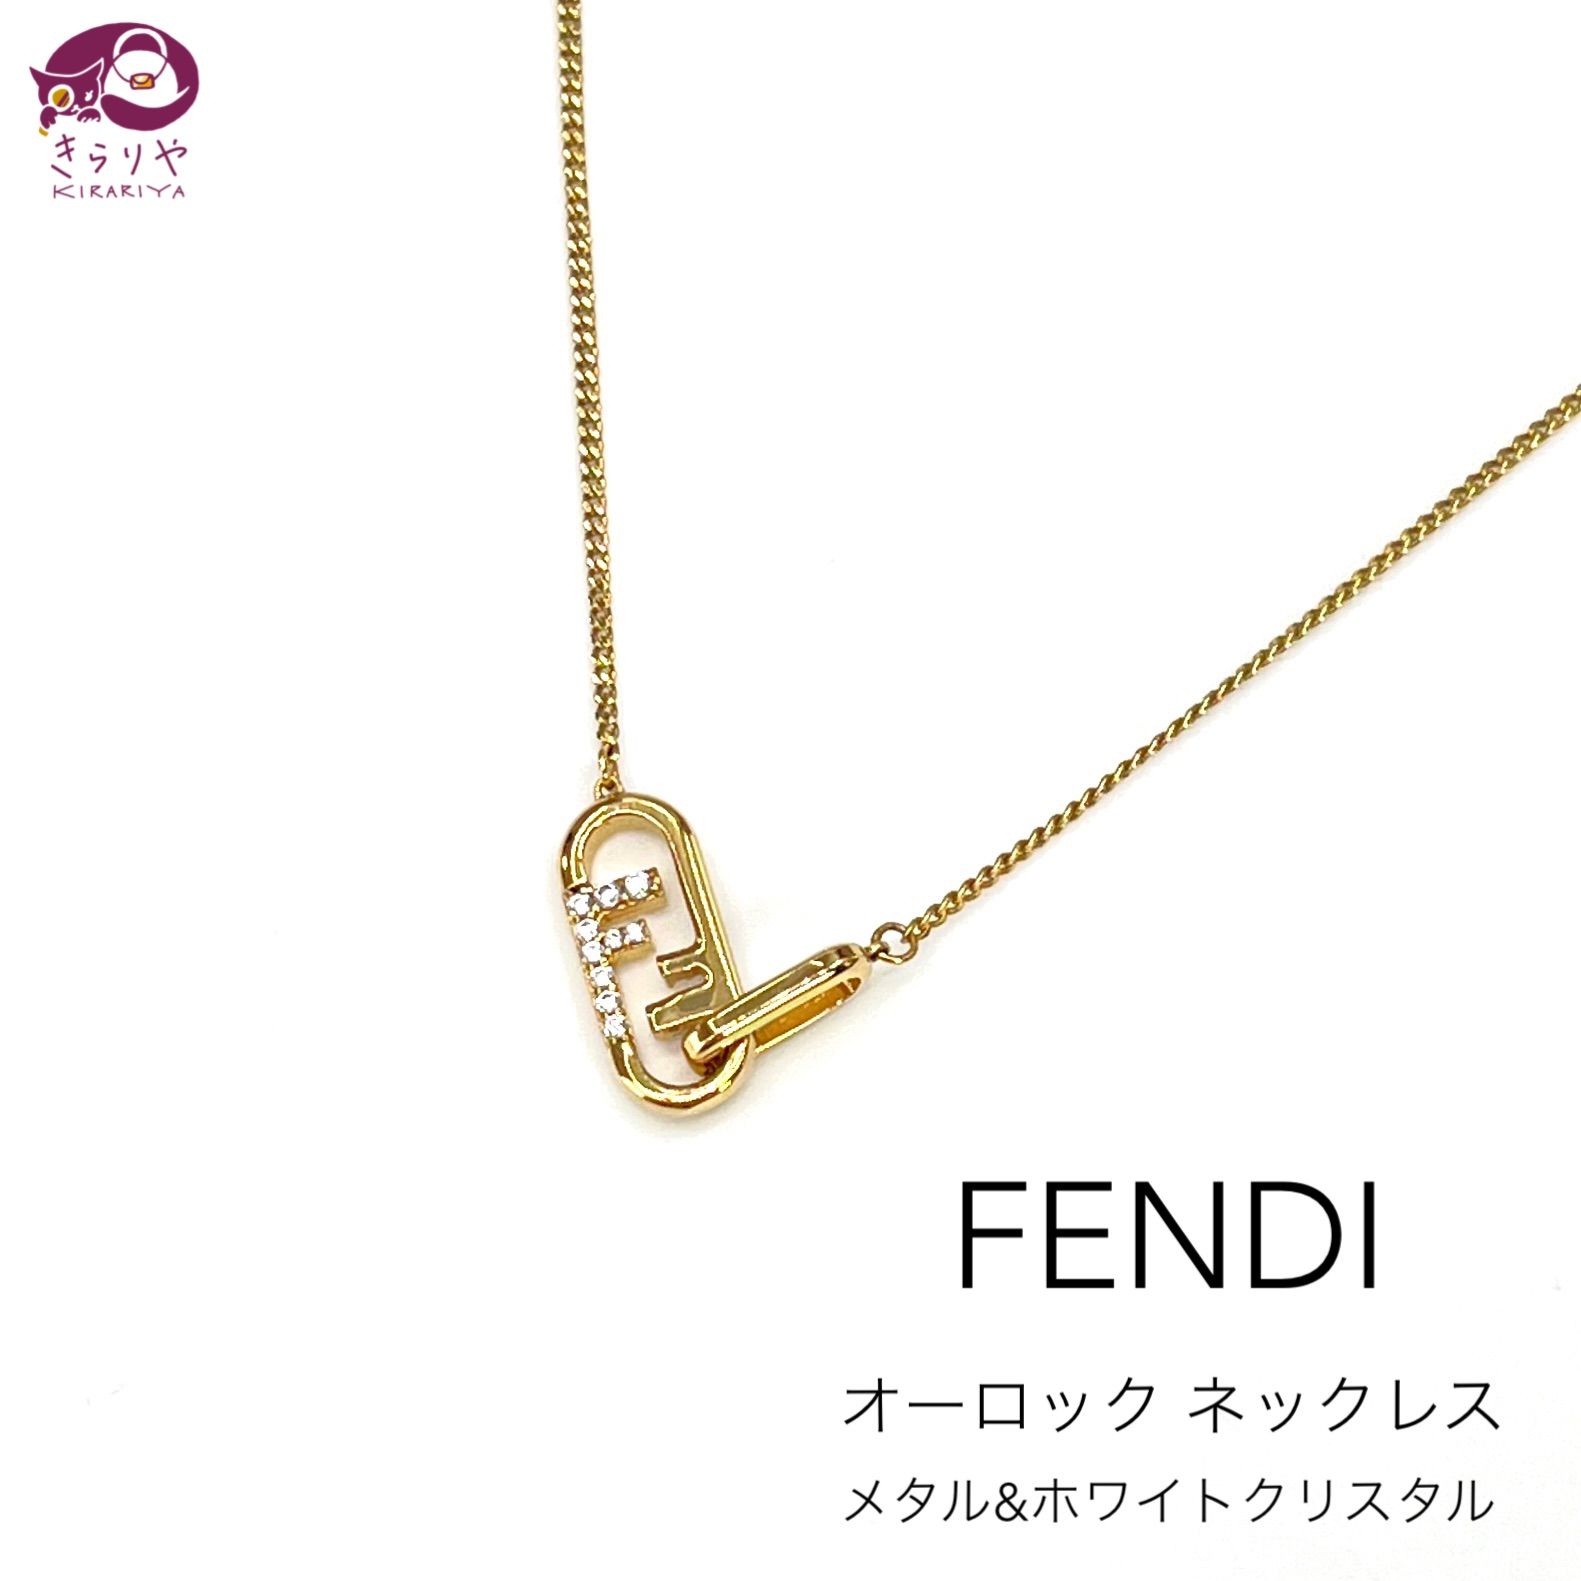 FENDI フェンディ 8AH321 オーロック ネックレス ホワイトクリスタル ゴールドカラーメタル 全長49.5㎝ IT0522 イタリア製 -  メルカリ